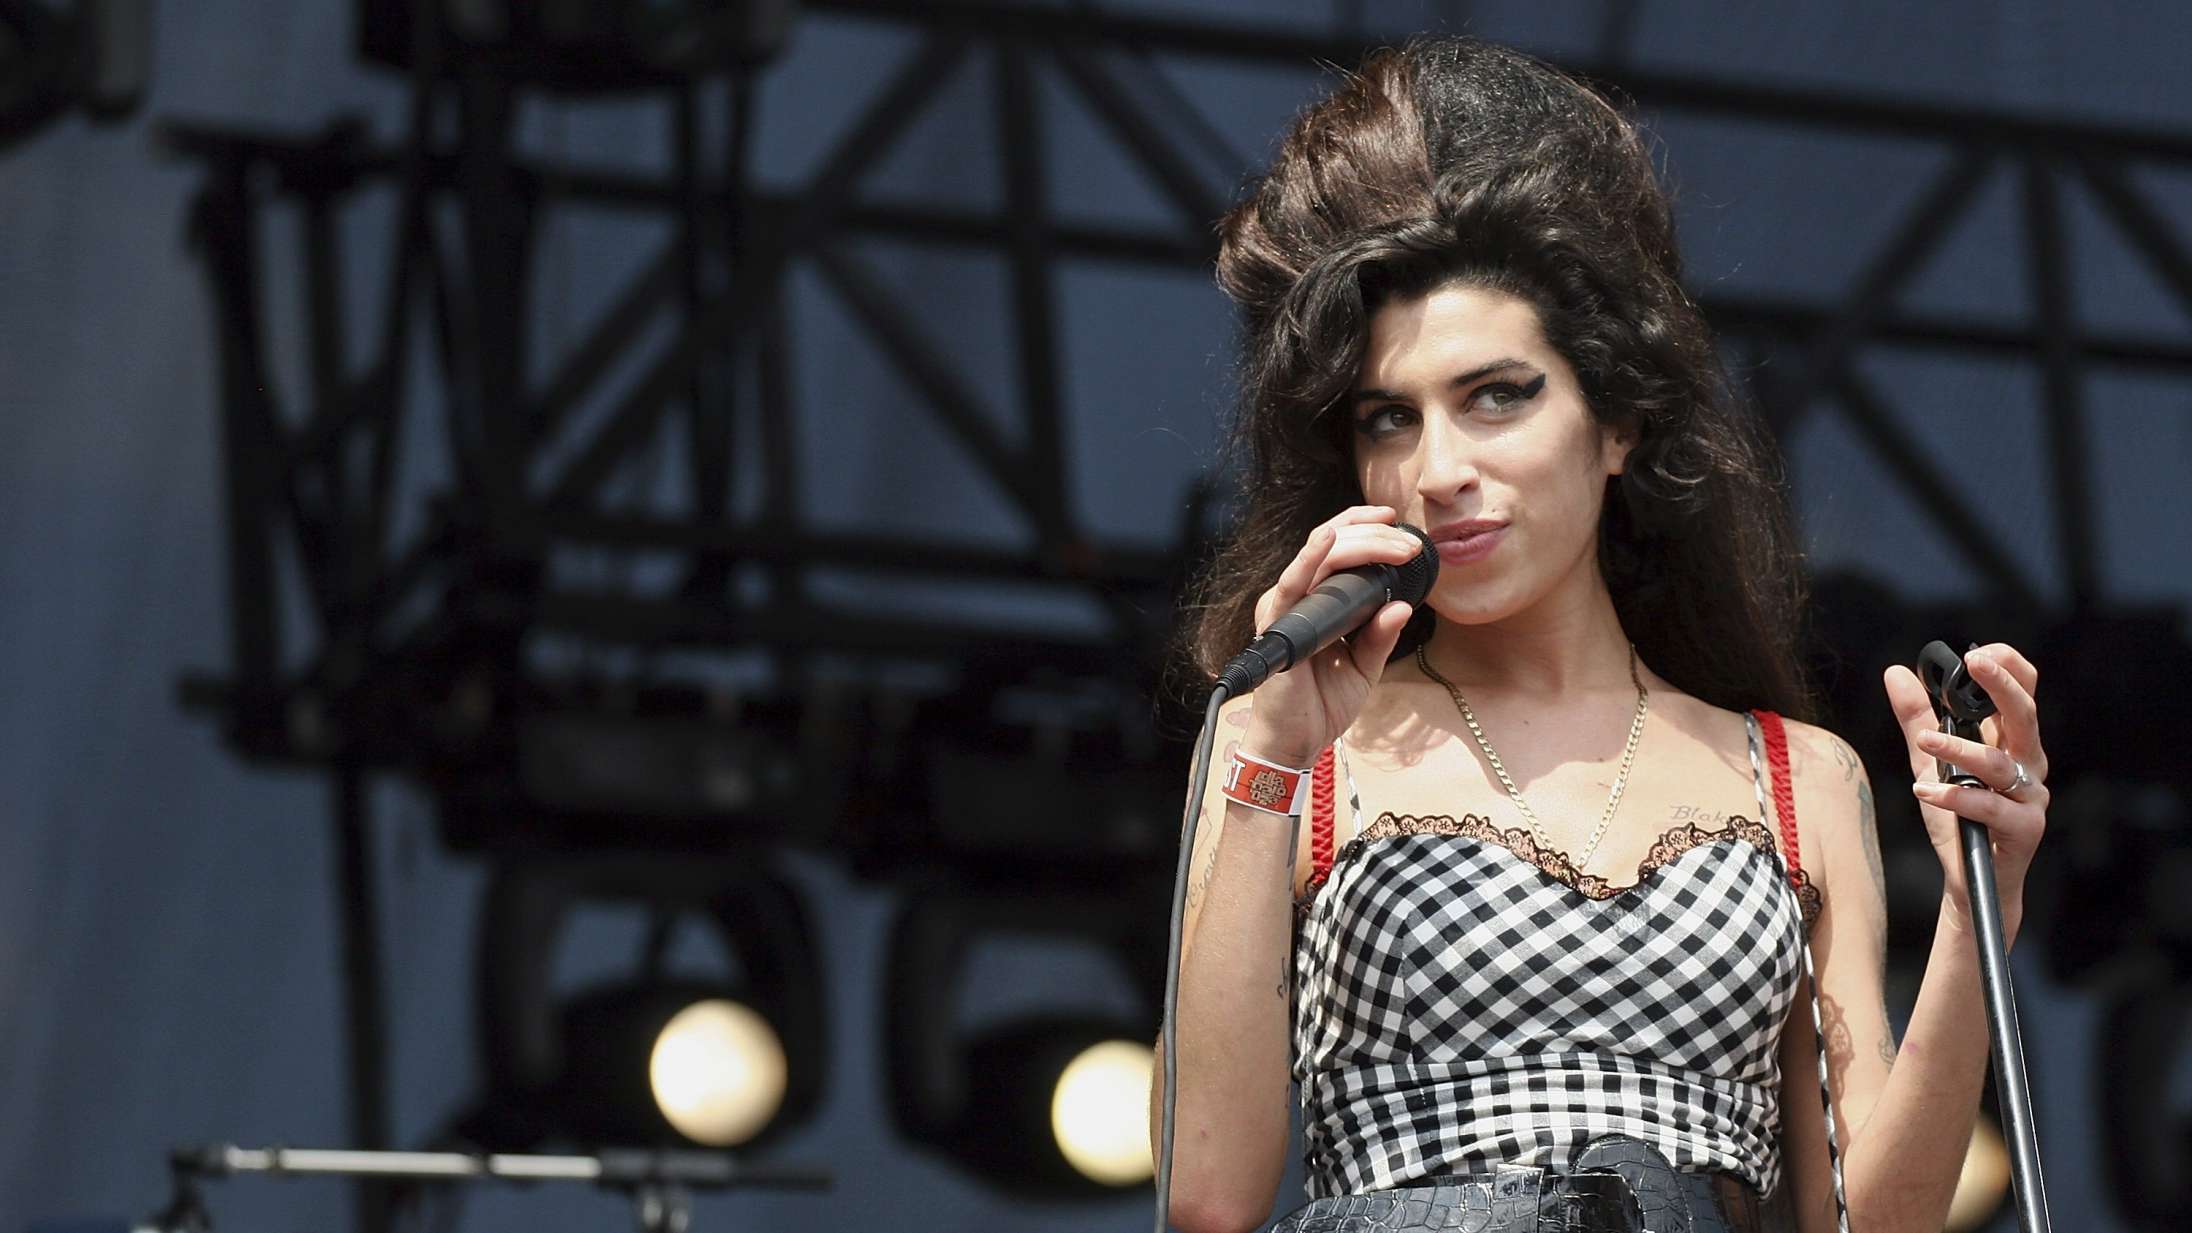 Her er favoritten til at spille Amy Winehouse i kommende biopic